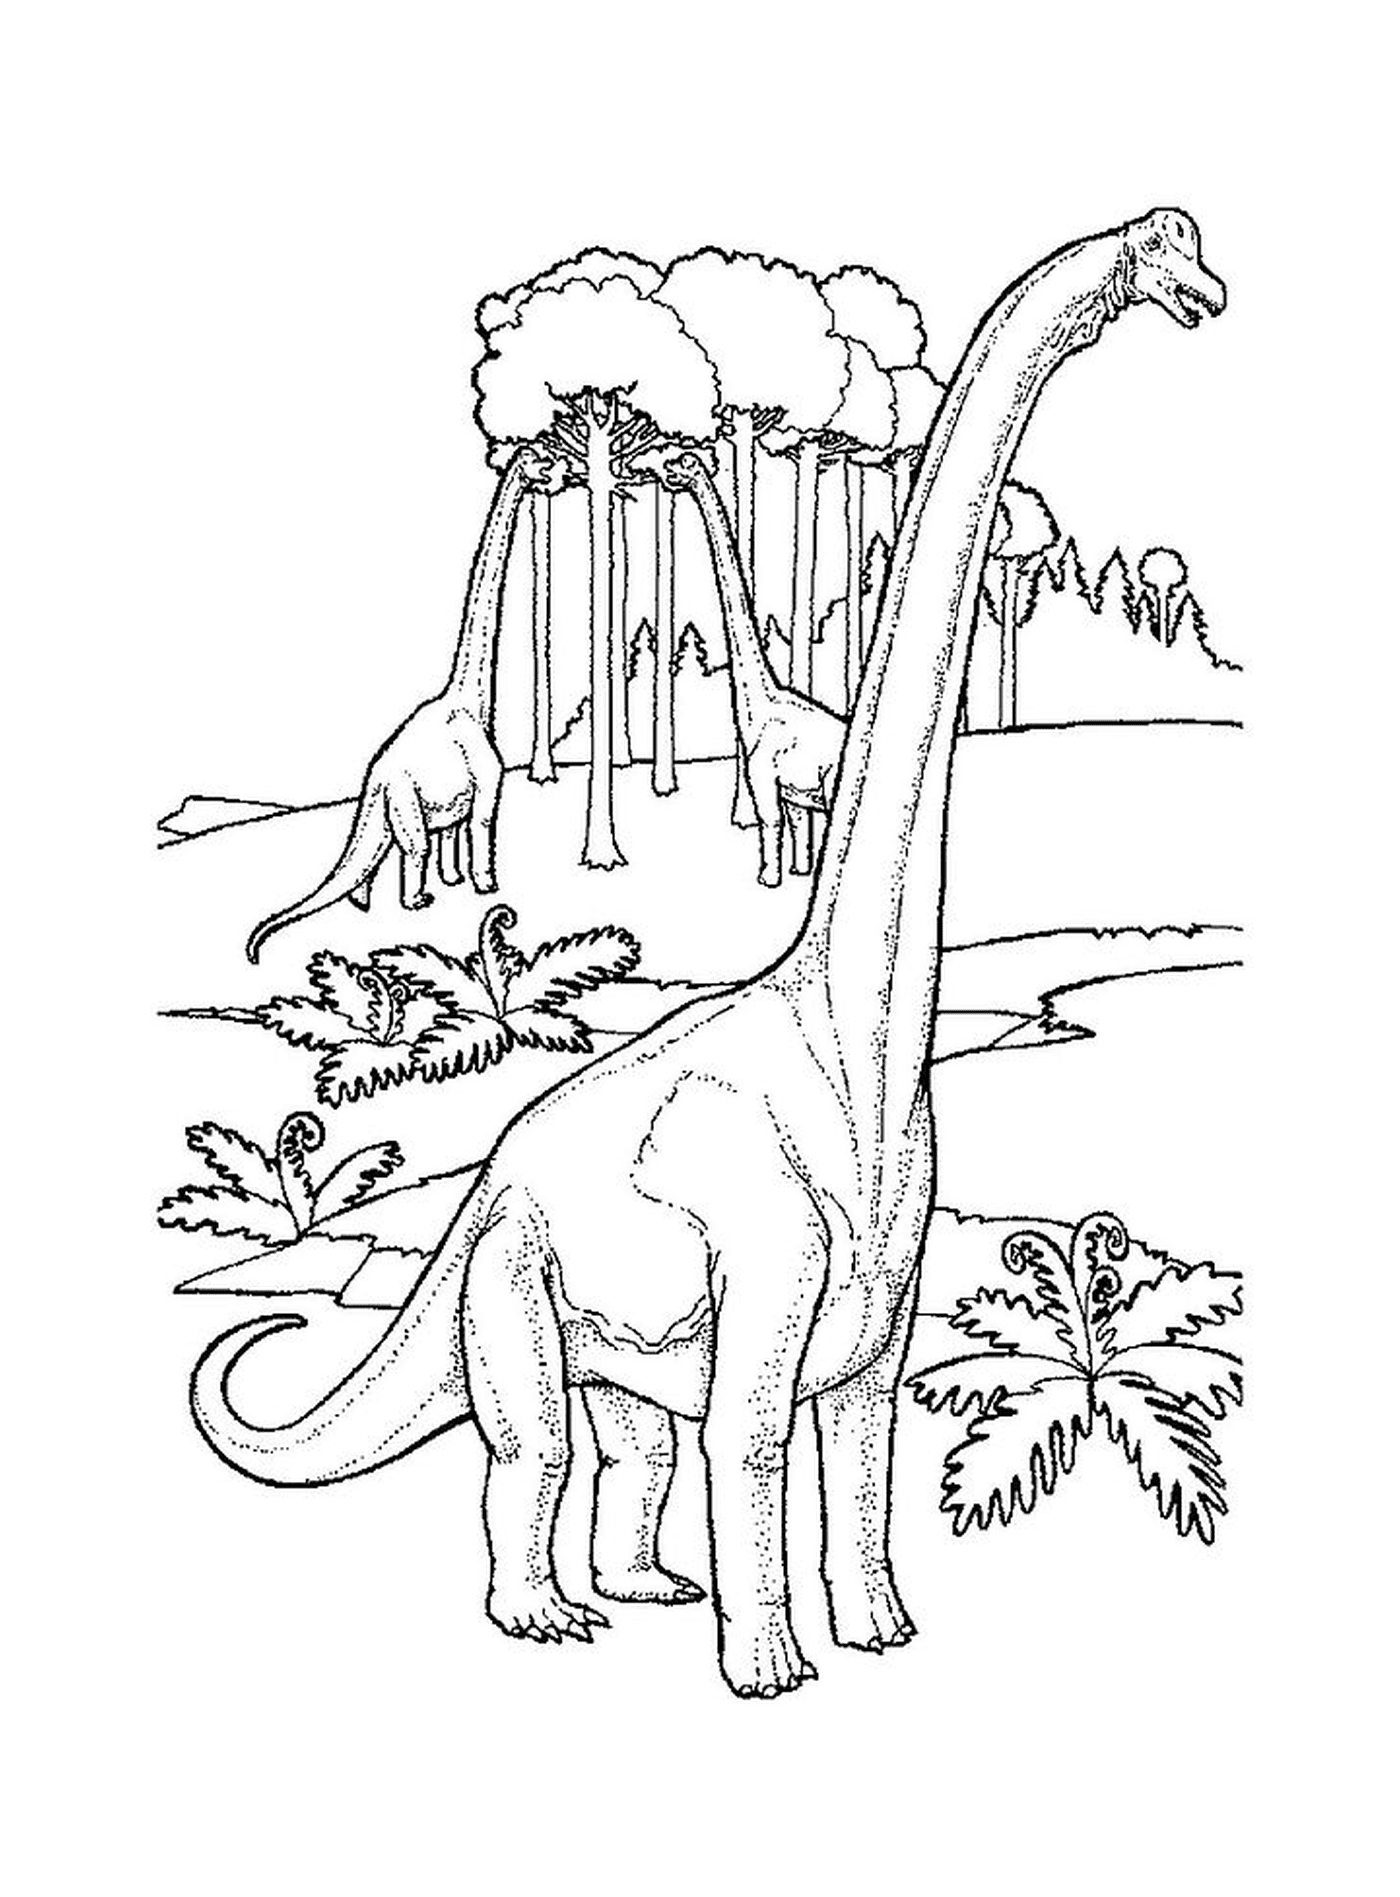  Um dinossauro adulto na selva 